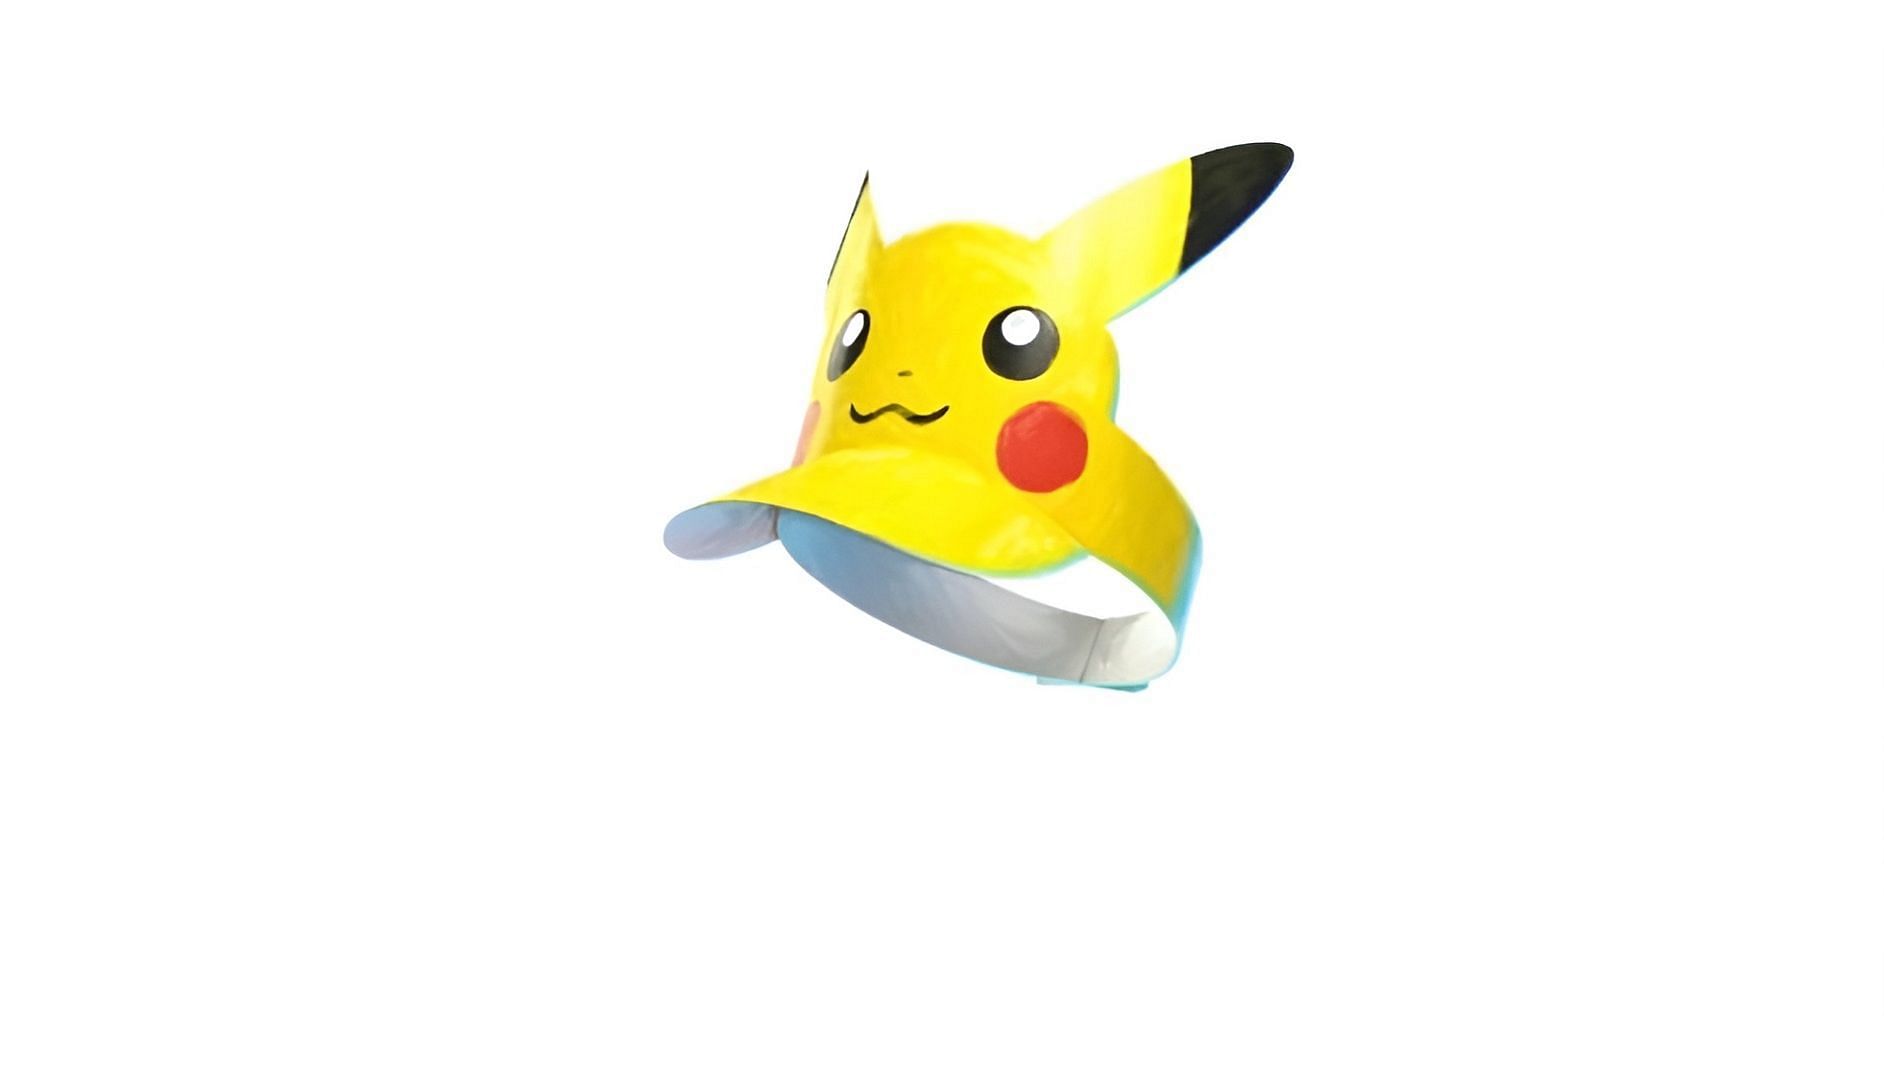 The Pikachu Visor is one of many Pokemon GO souvenirs (Image via Serebii.net)